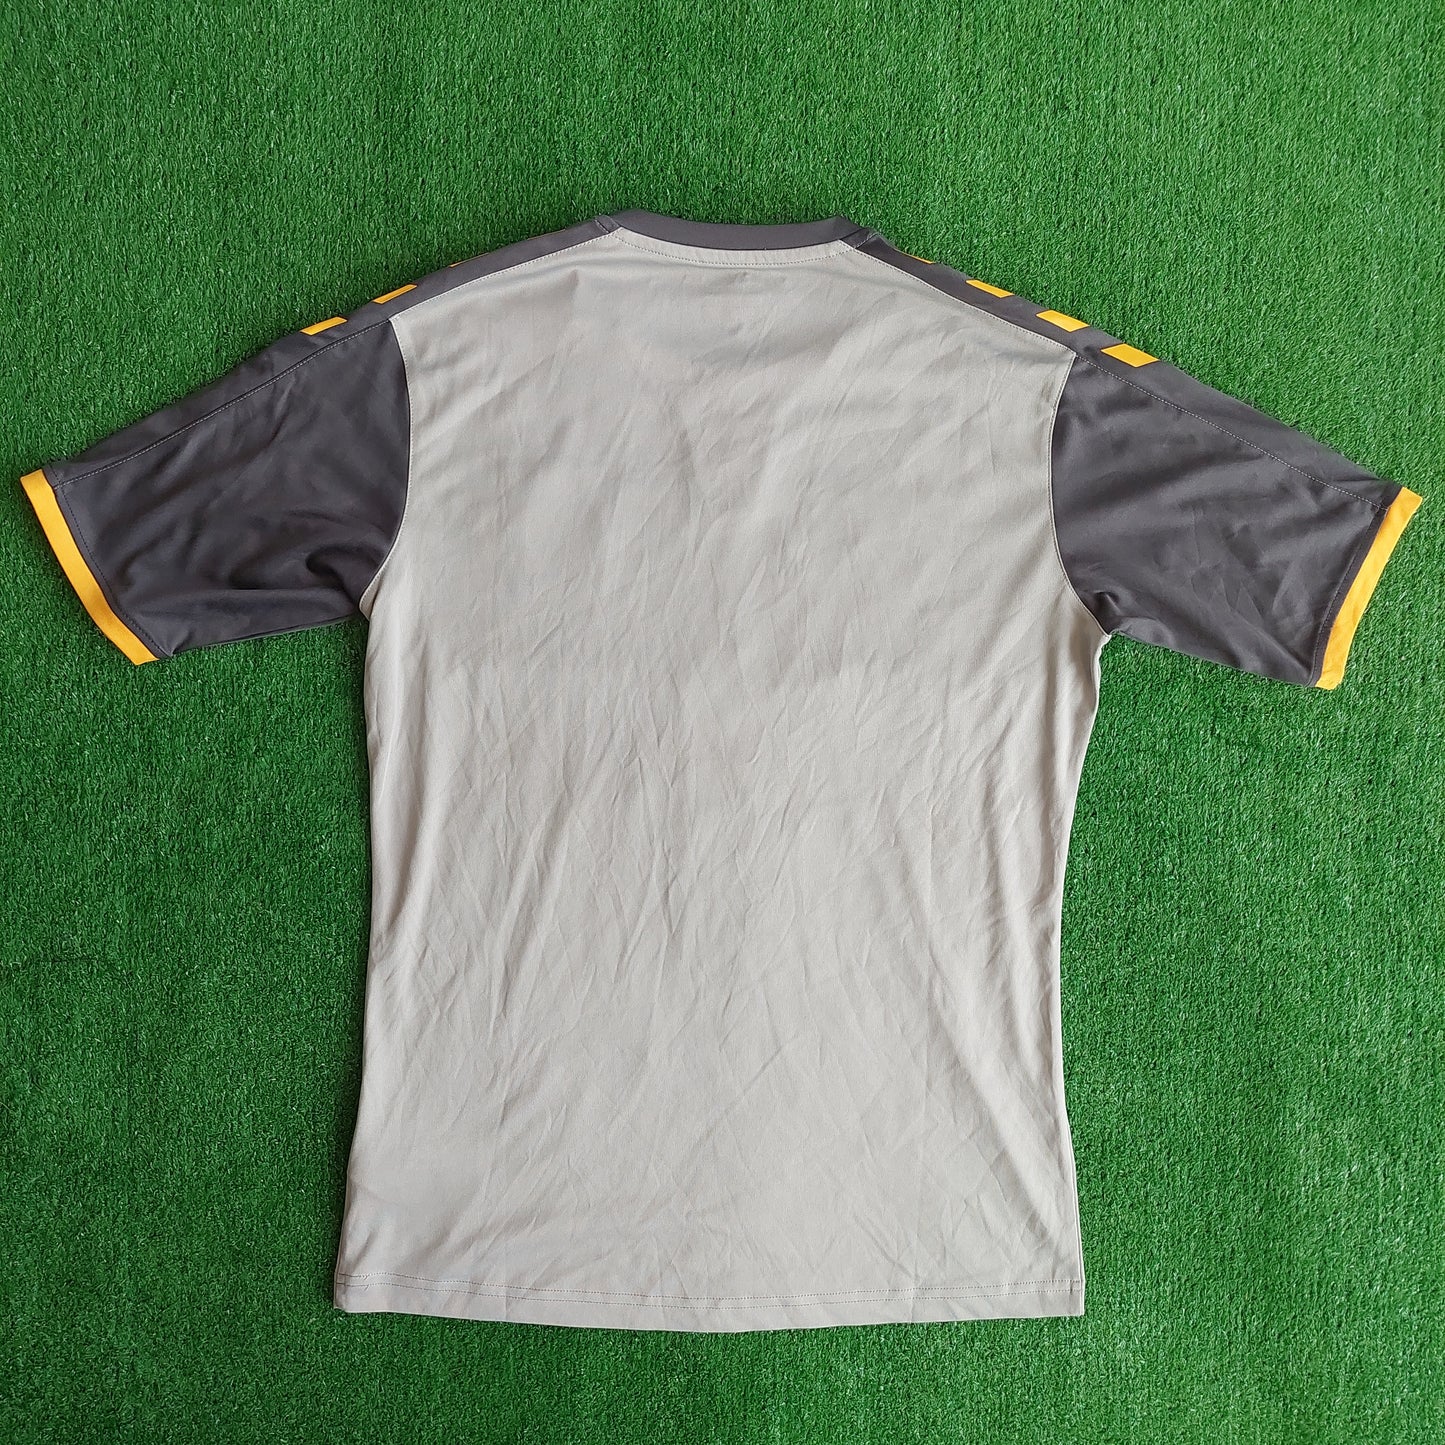 Cambridge United 2020/21 Training Shirt (Excellent) - Size S